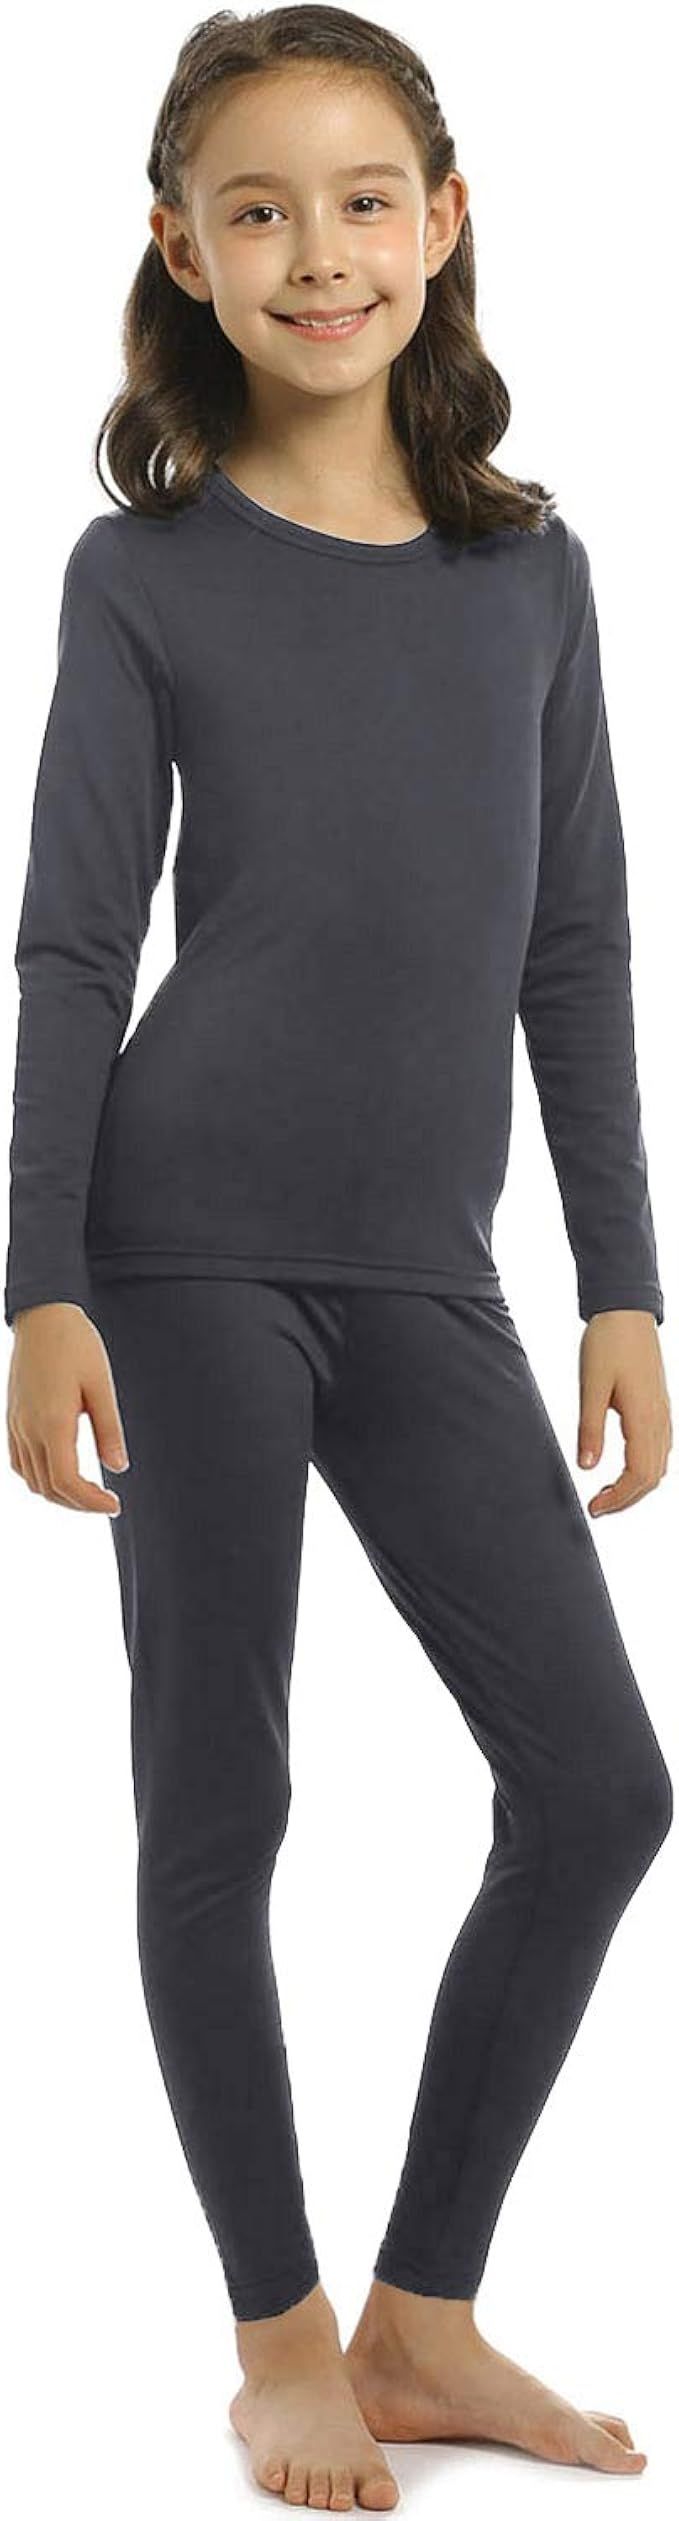 Girls Thermal Underwear Set Kids Long Johns Fleece Lined Base Layer Top & Bottom | Amazon (US)